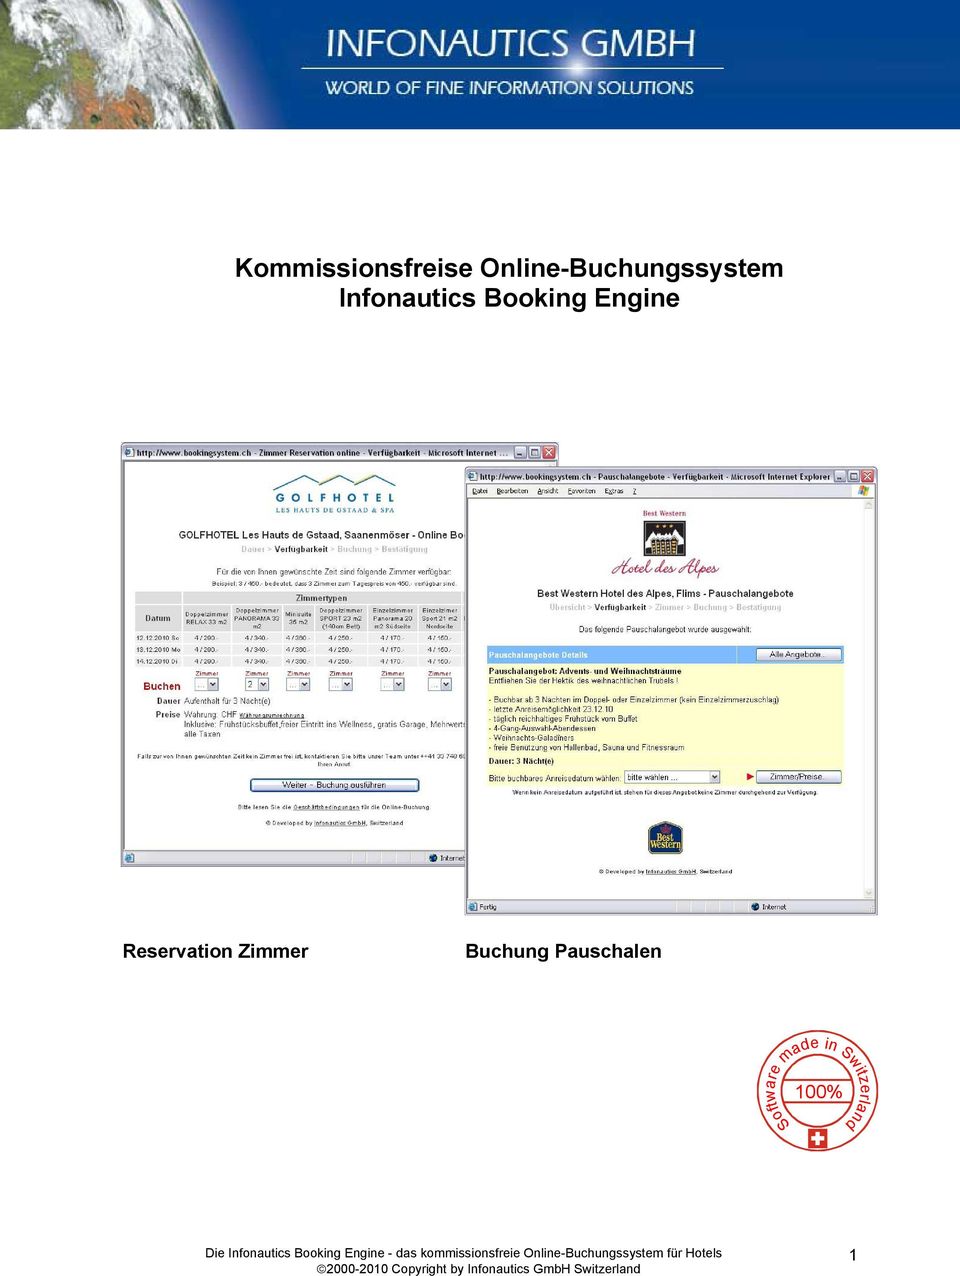 Online-Buchungssystem Infonautics